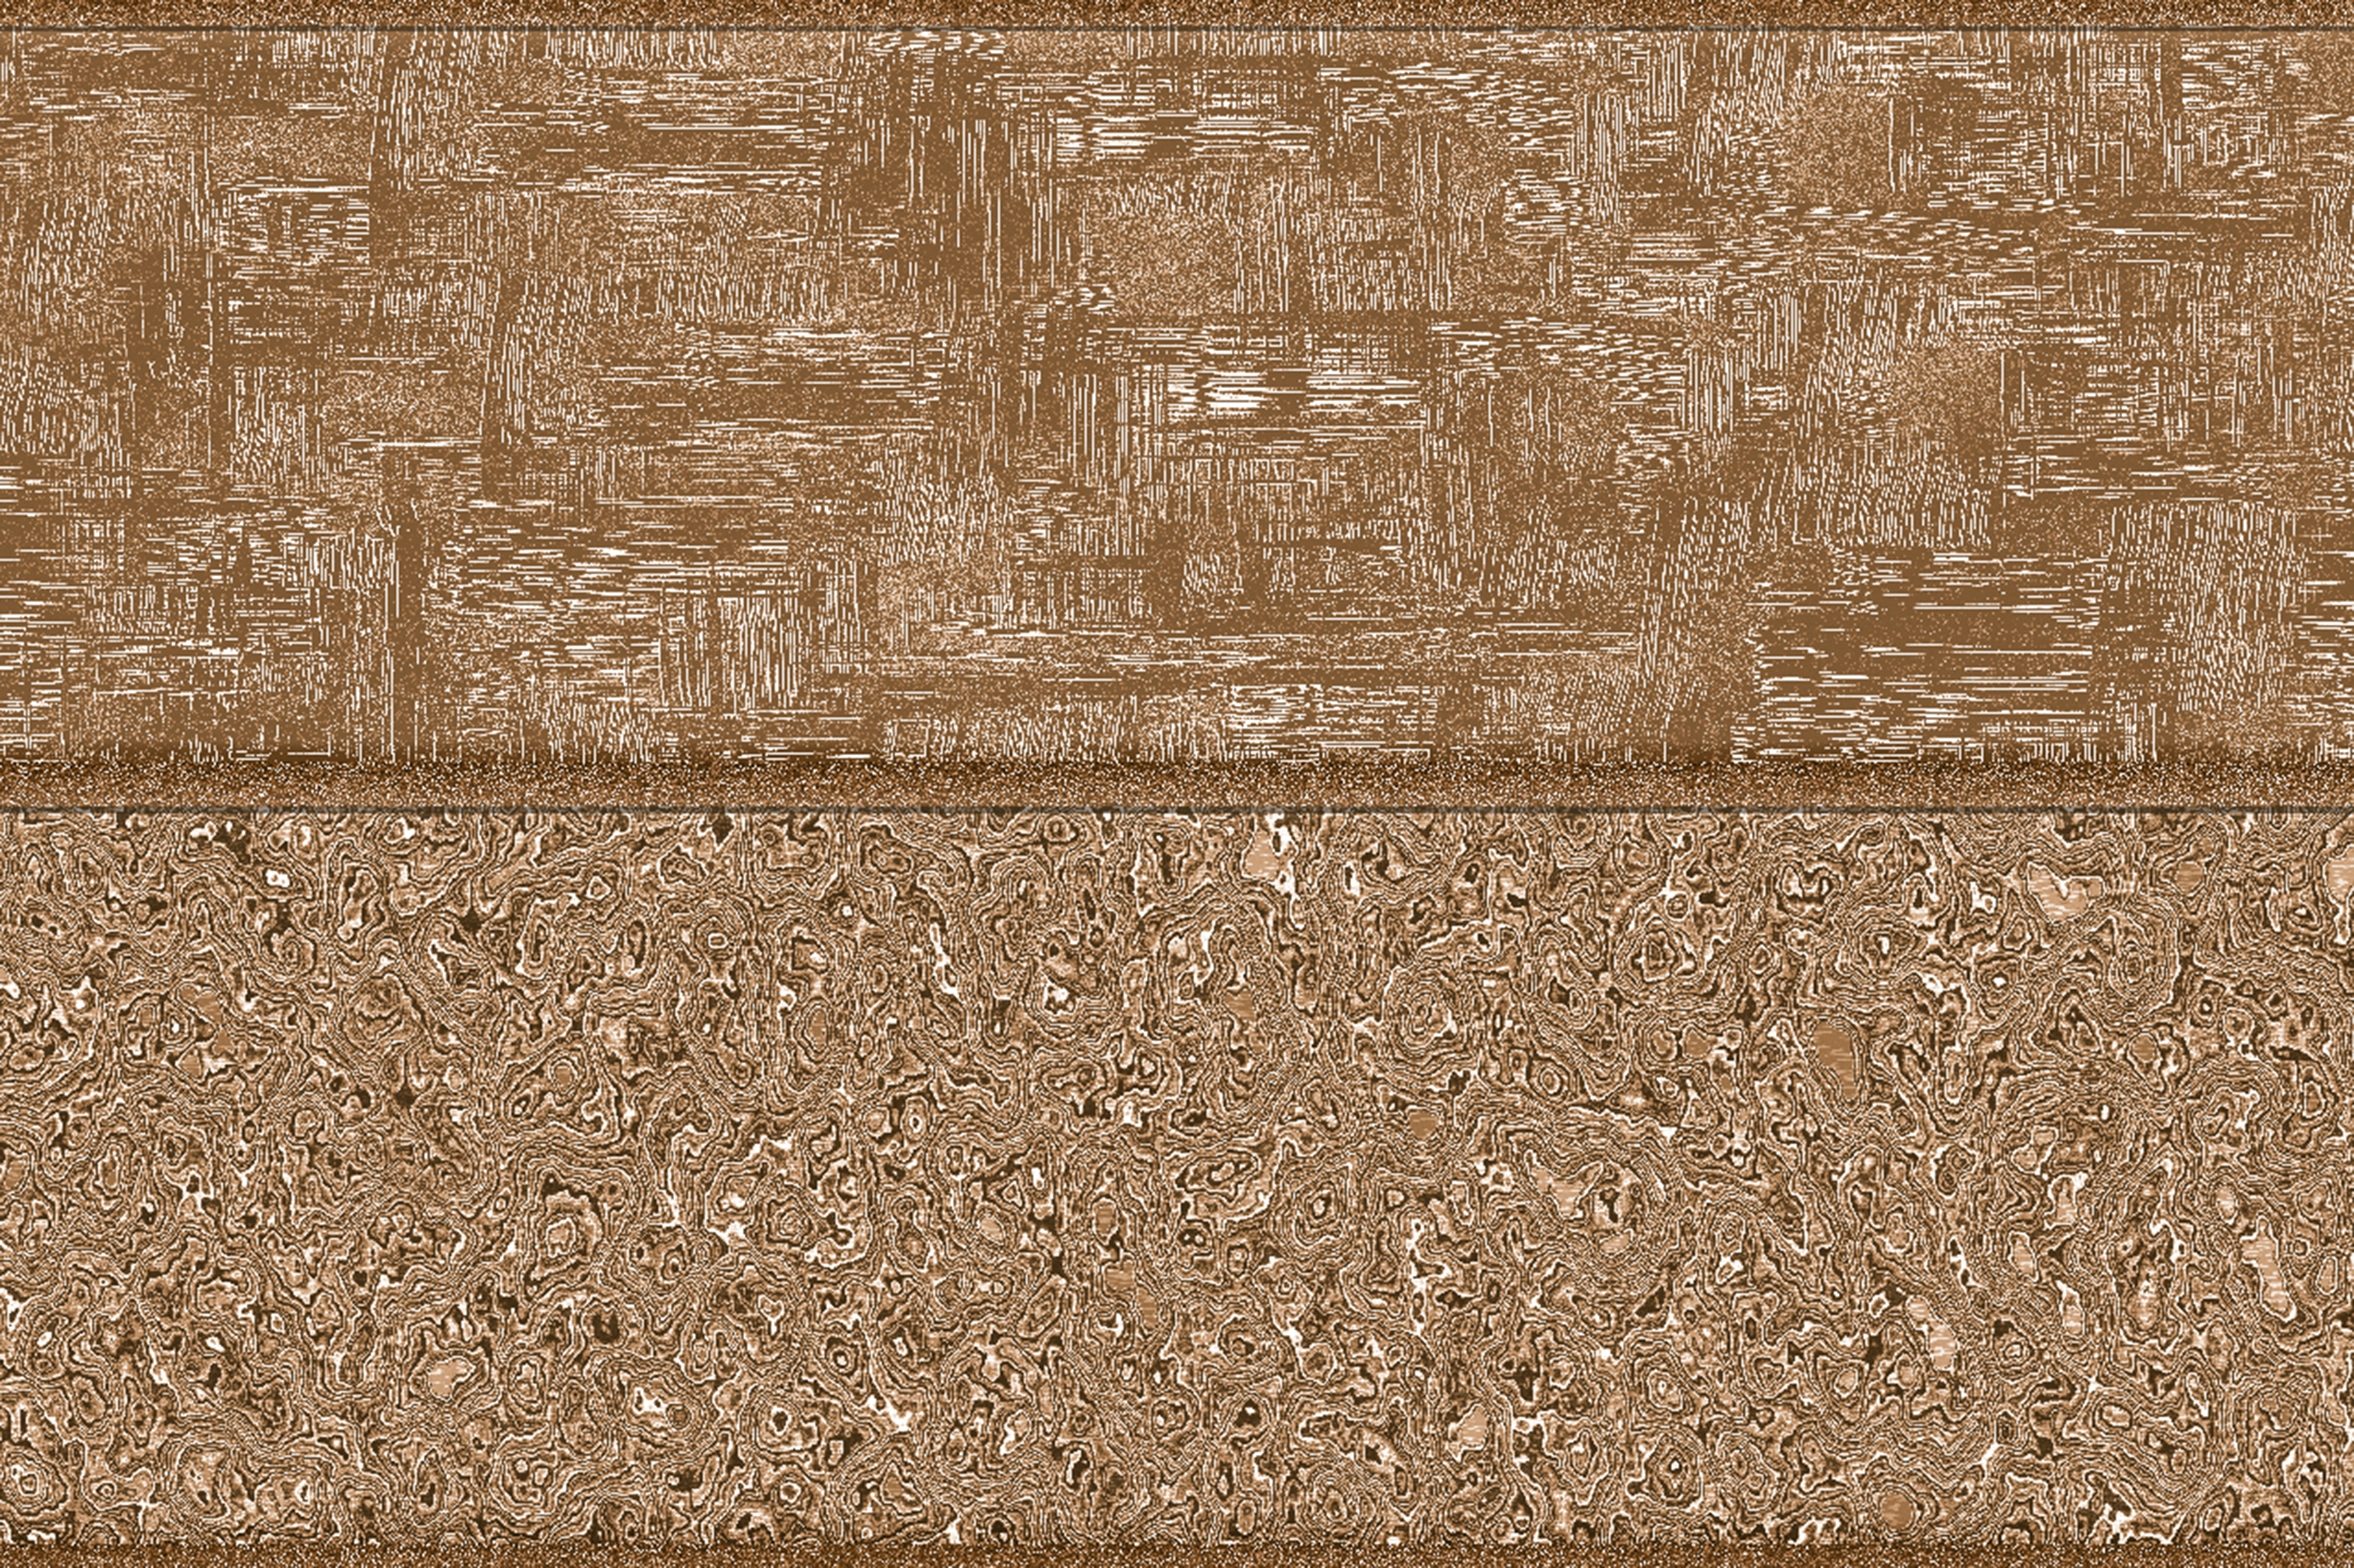 15076 Glossy Ceramic Wall Tiles 300x450mm